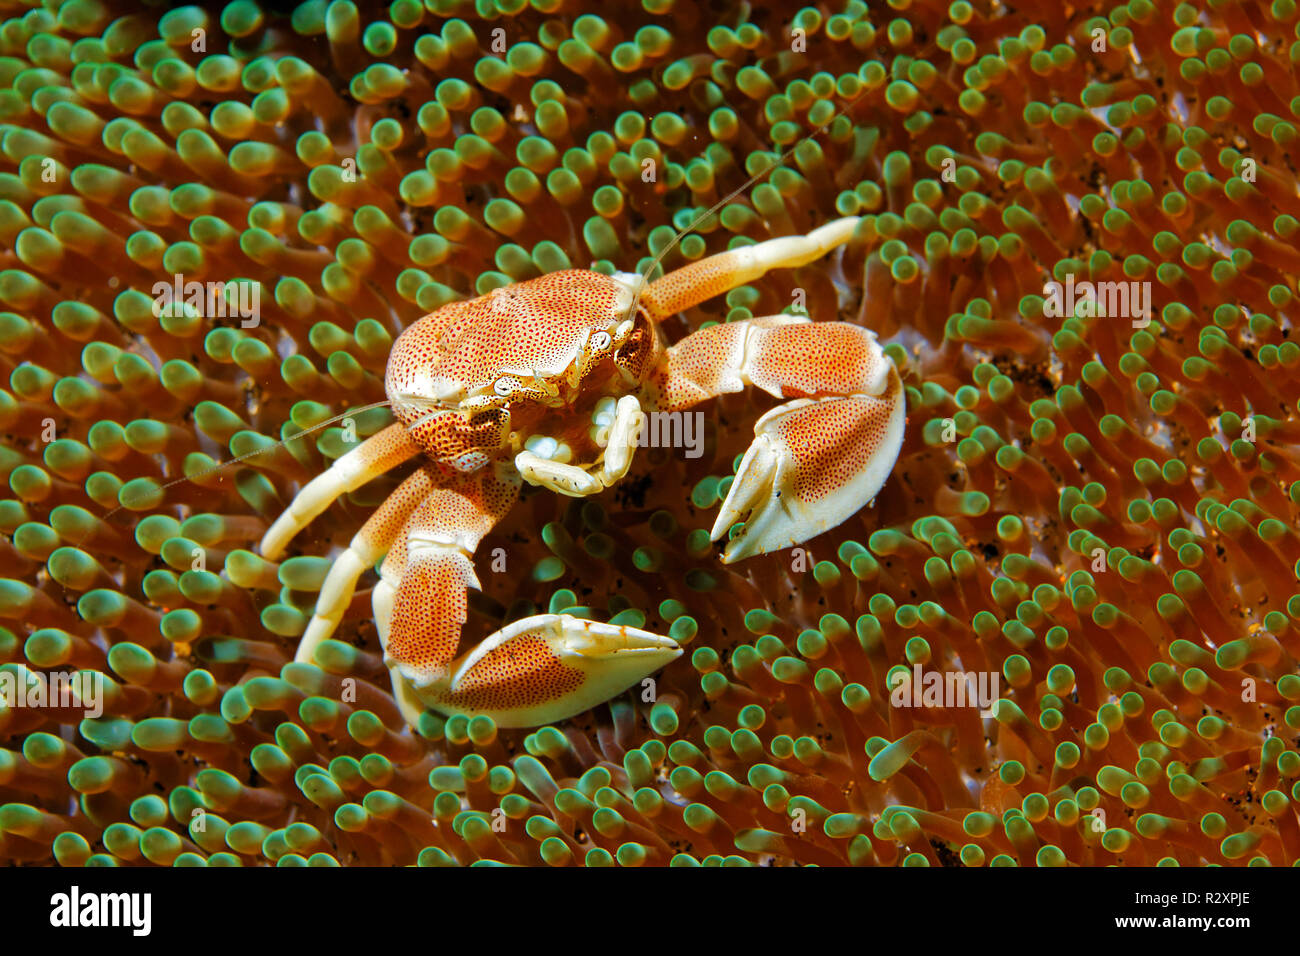 Gefleckte Porzellan Krabben (neopetrolisthes Maculatus) auf einem haddons Seeanemone (Stichodactyla haddoni), Symbiose, Sabang Beach, Mindoro, Philippinen Stockfoto